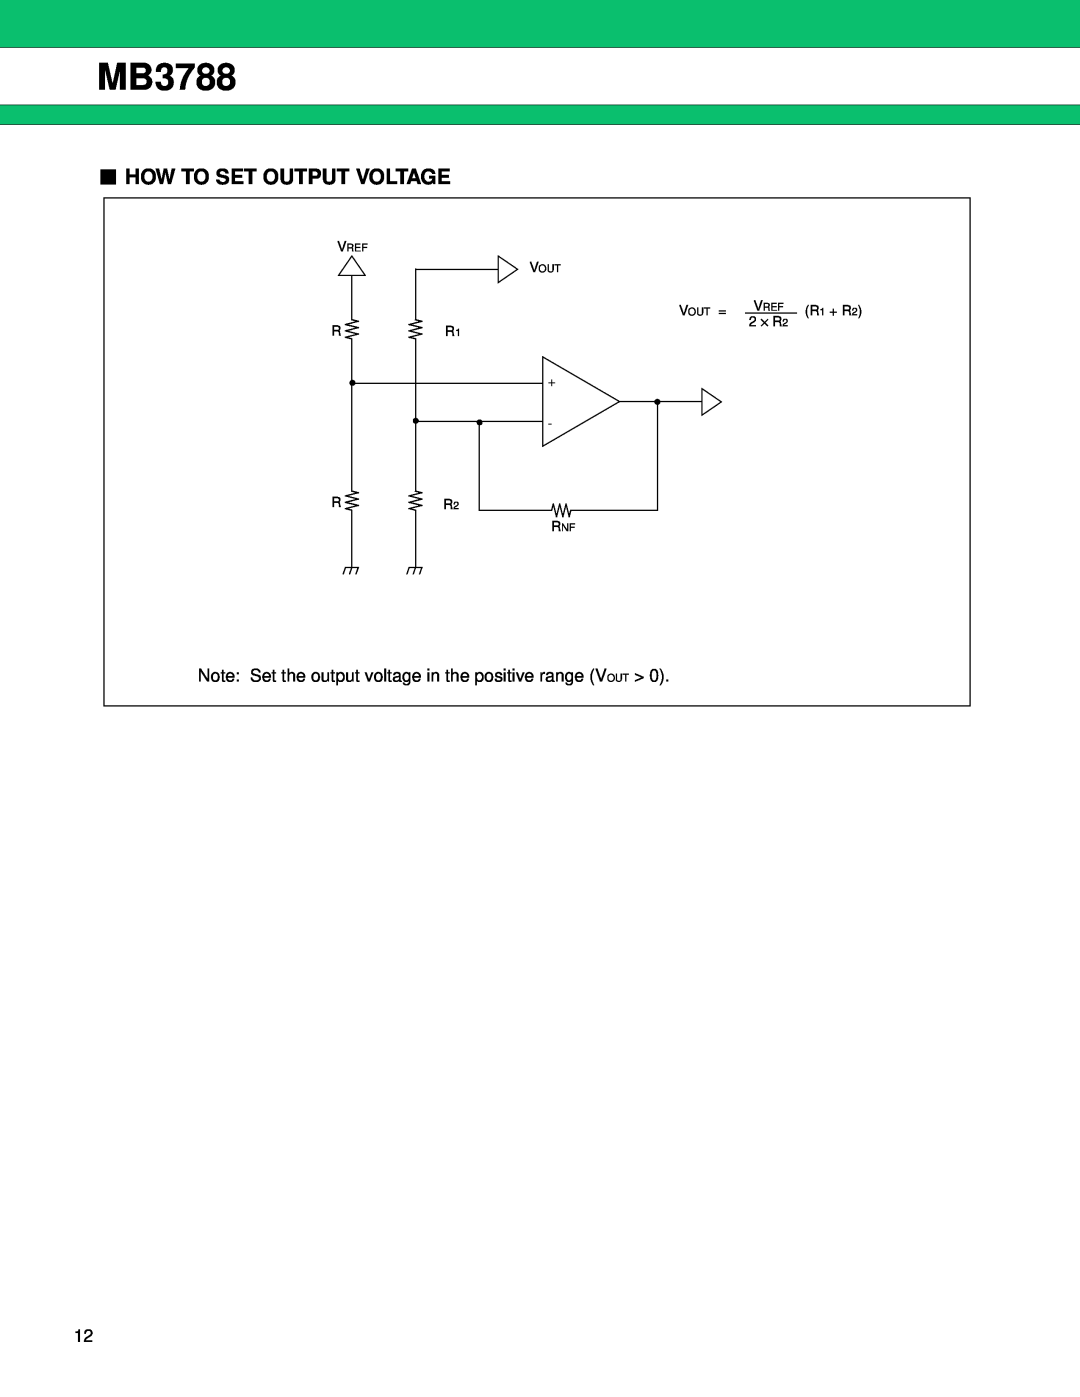 Fujitsu MB3788 manual How To Set Output Voltage, ⋅ R, Vref, Vout = 